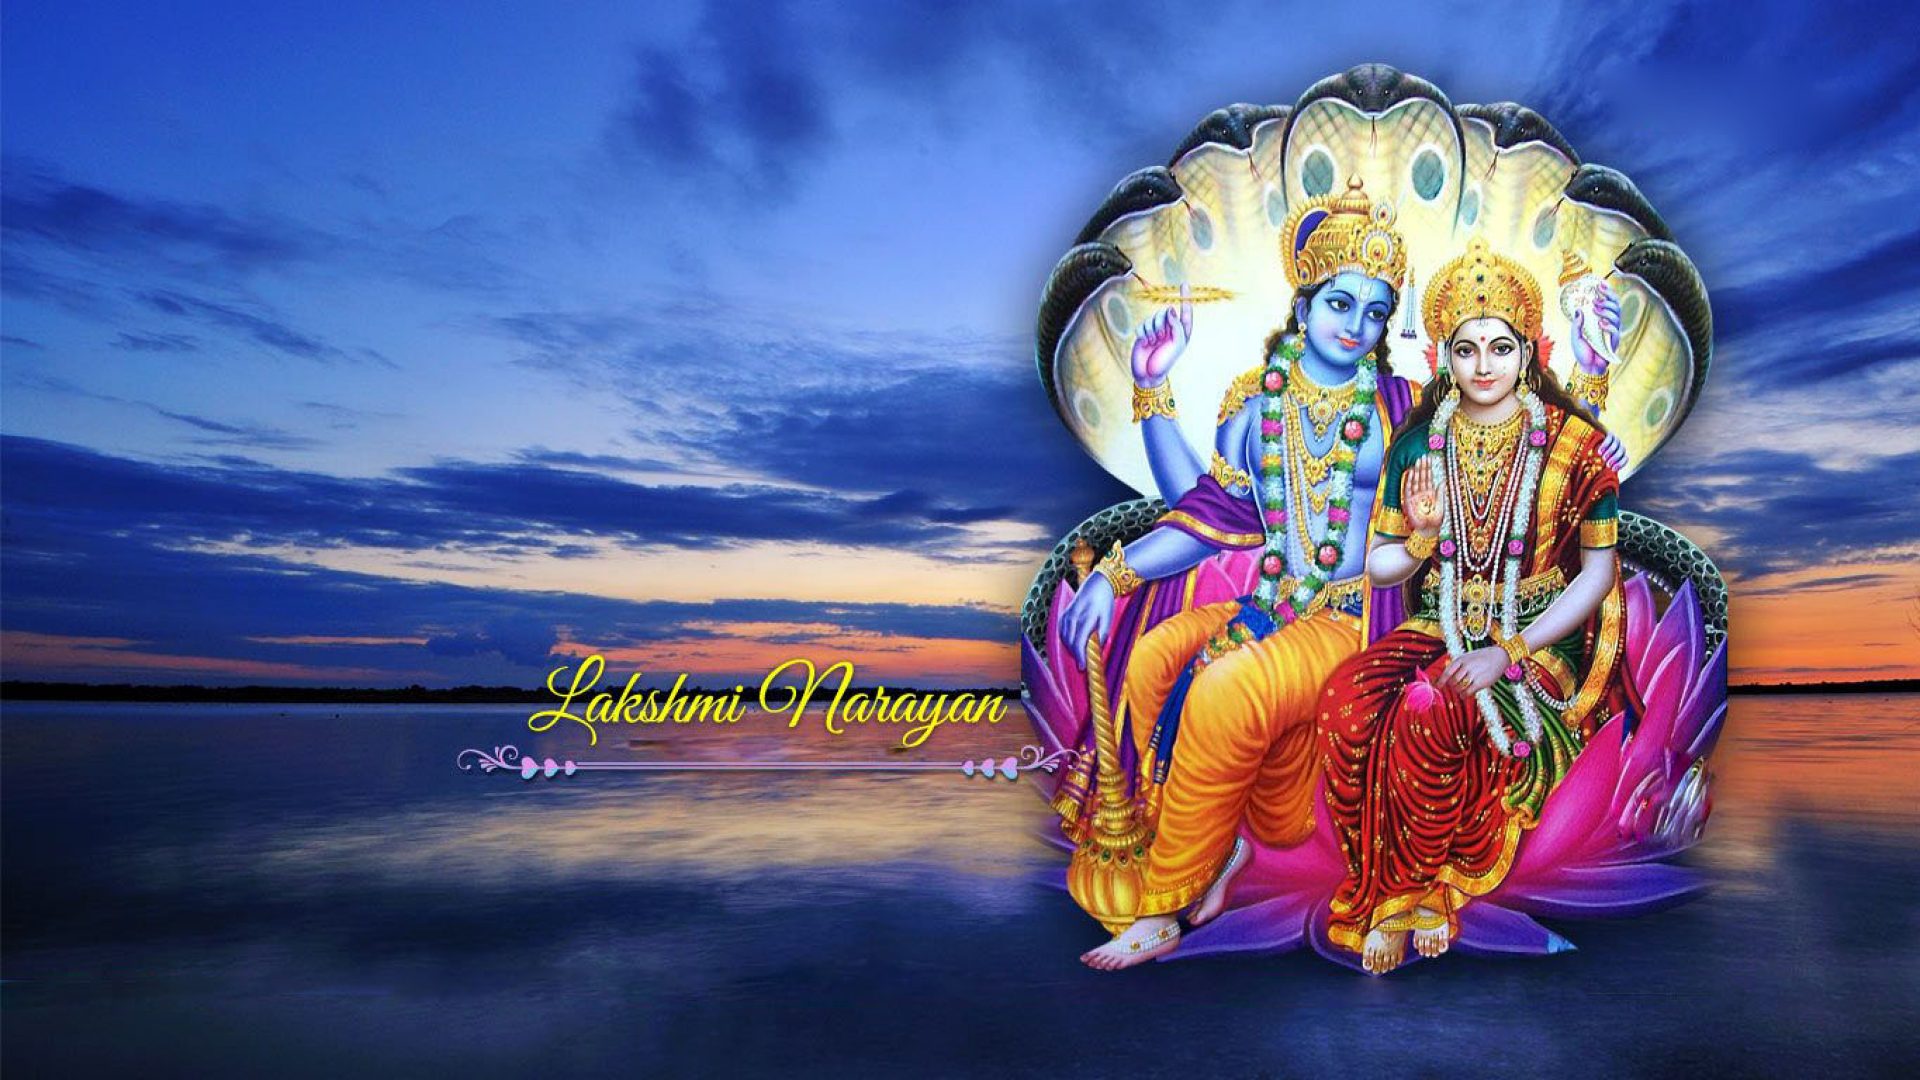 Vishnu Bhagwan Hd Images Download | Hindu Gods and Goddesses